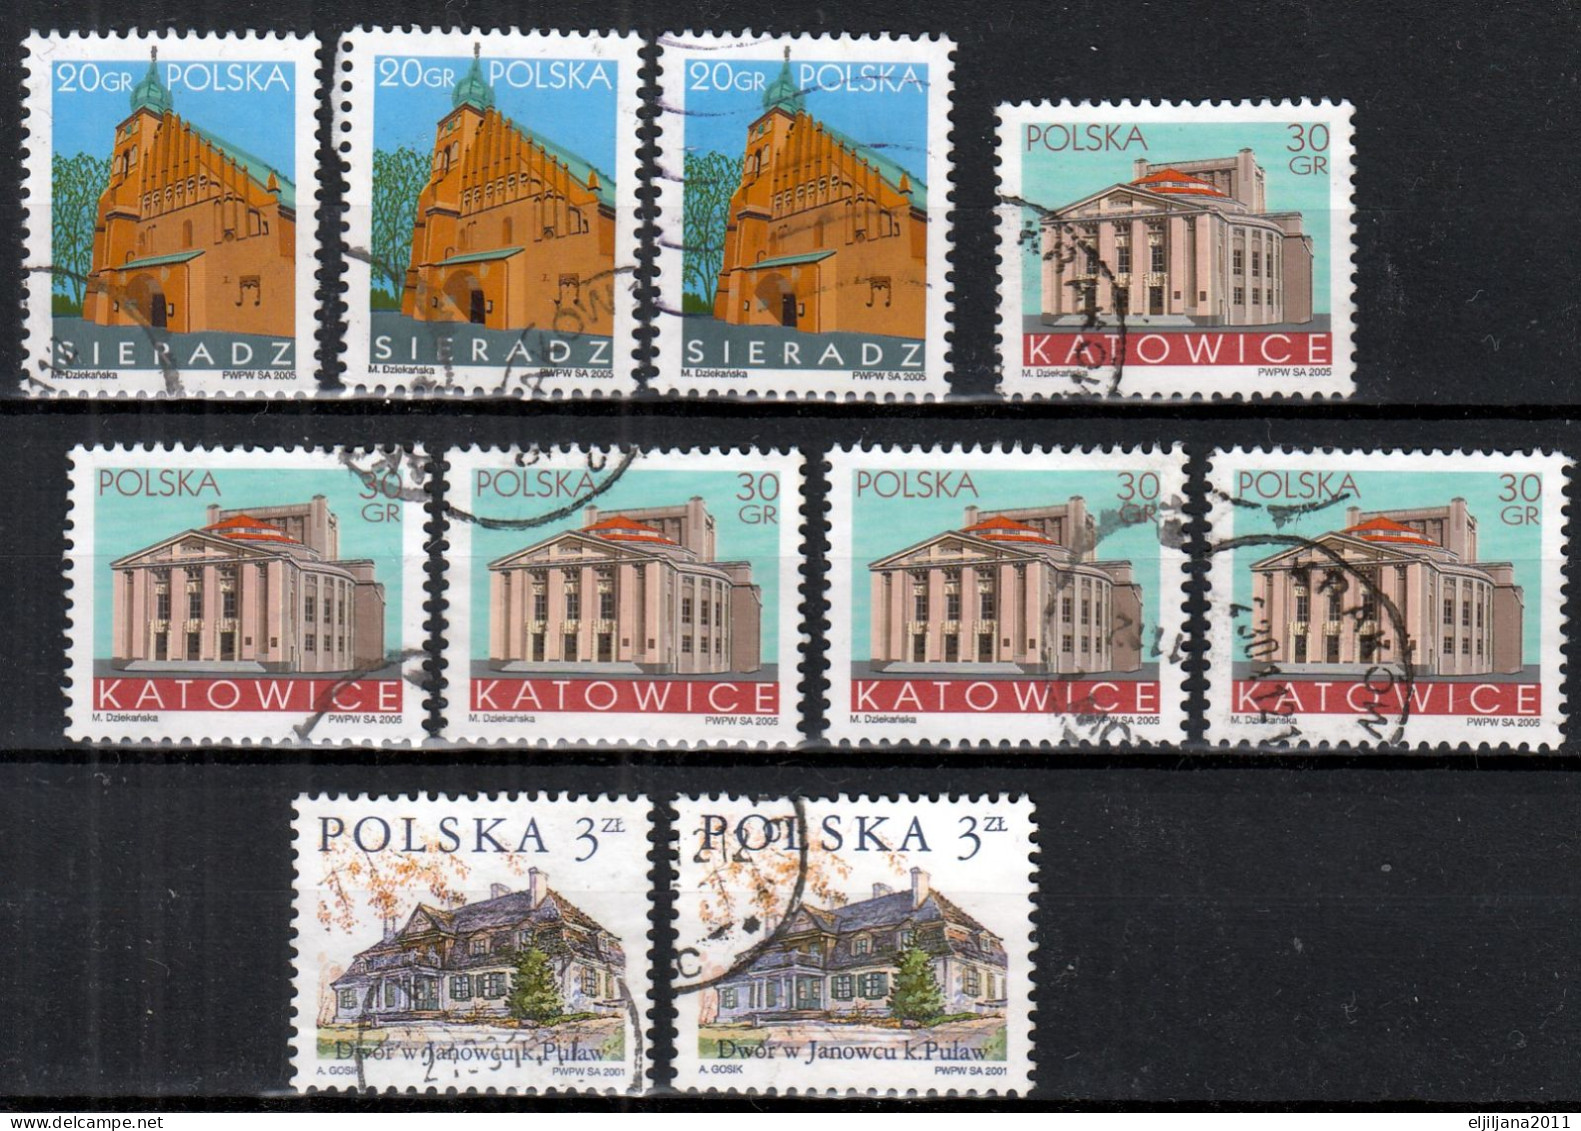 ⁕ Poland / Polska 1998 - 2005 ⁕ Castles - Cities Mi.3693,3882,3890,4199,4212 ⁕ 19v Used - Gebraucht